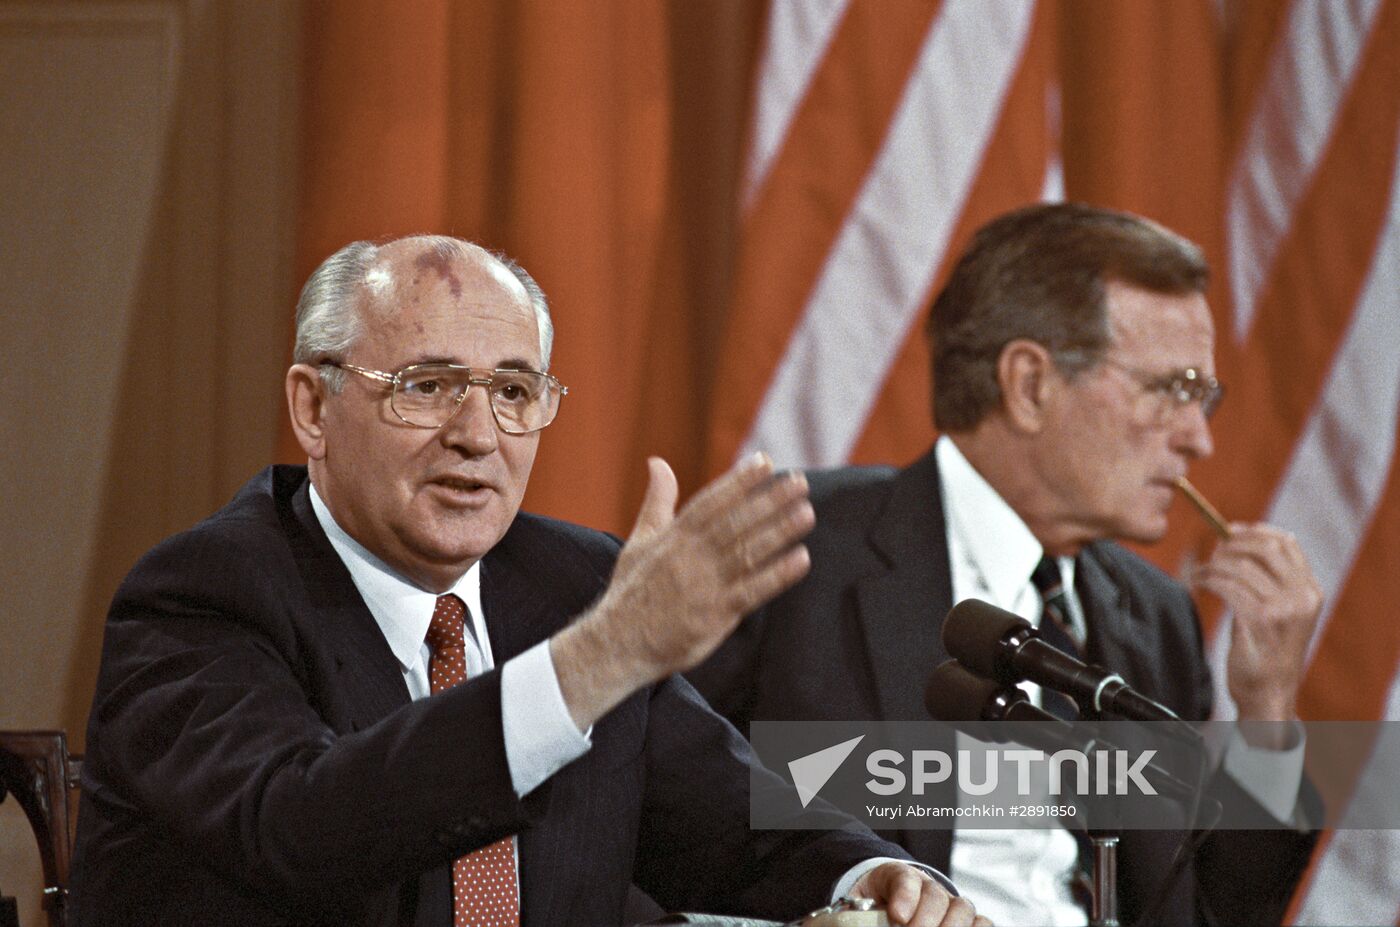 Mikhail Gorbachev’s official visit to the US